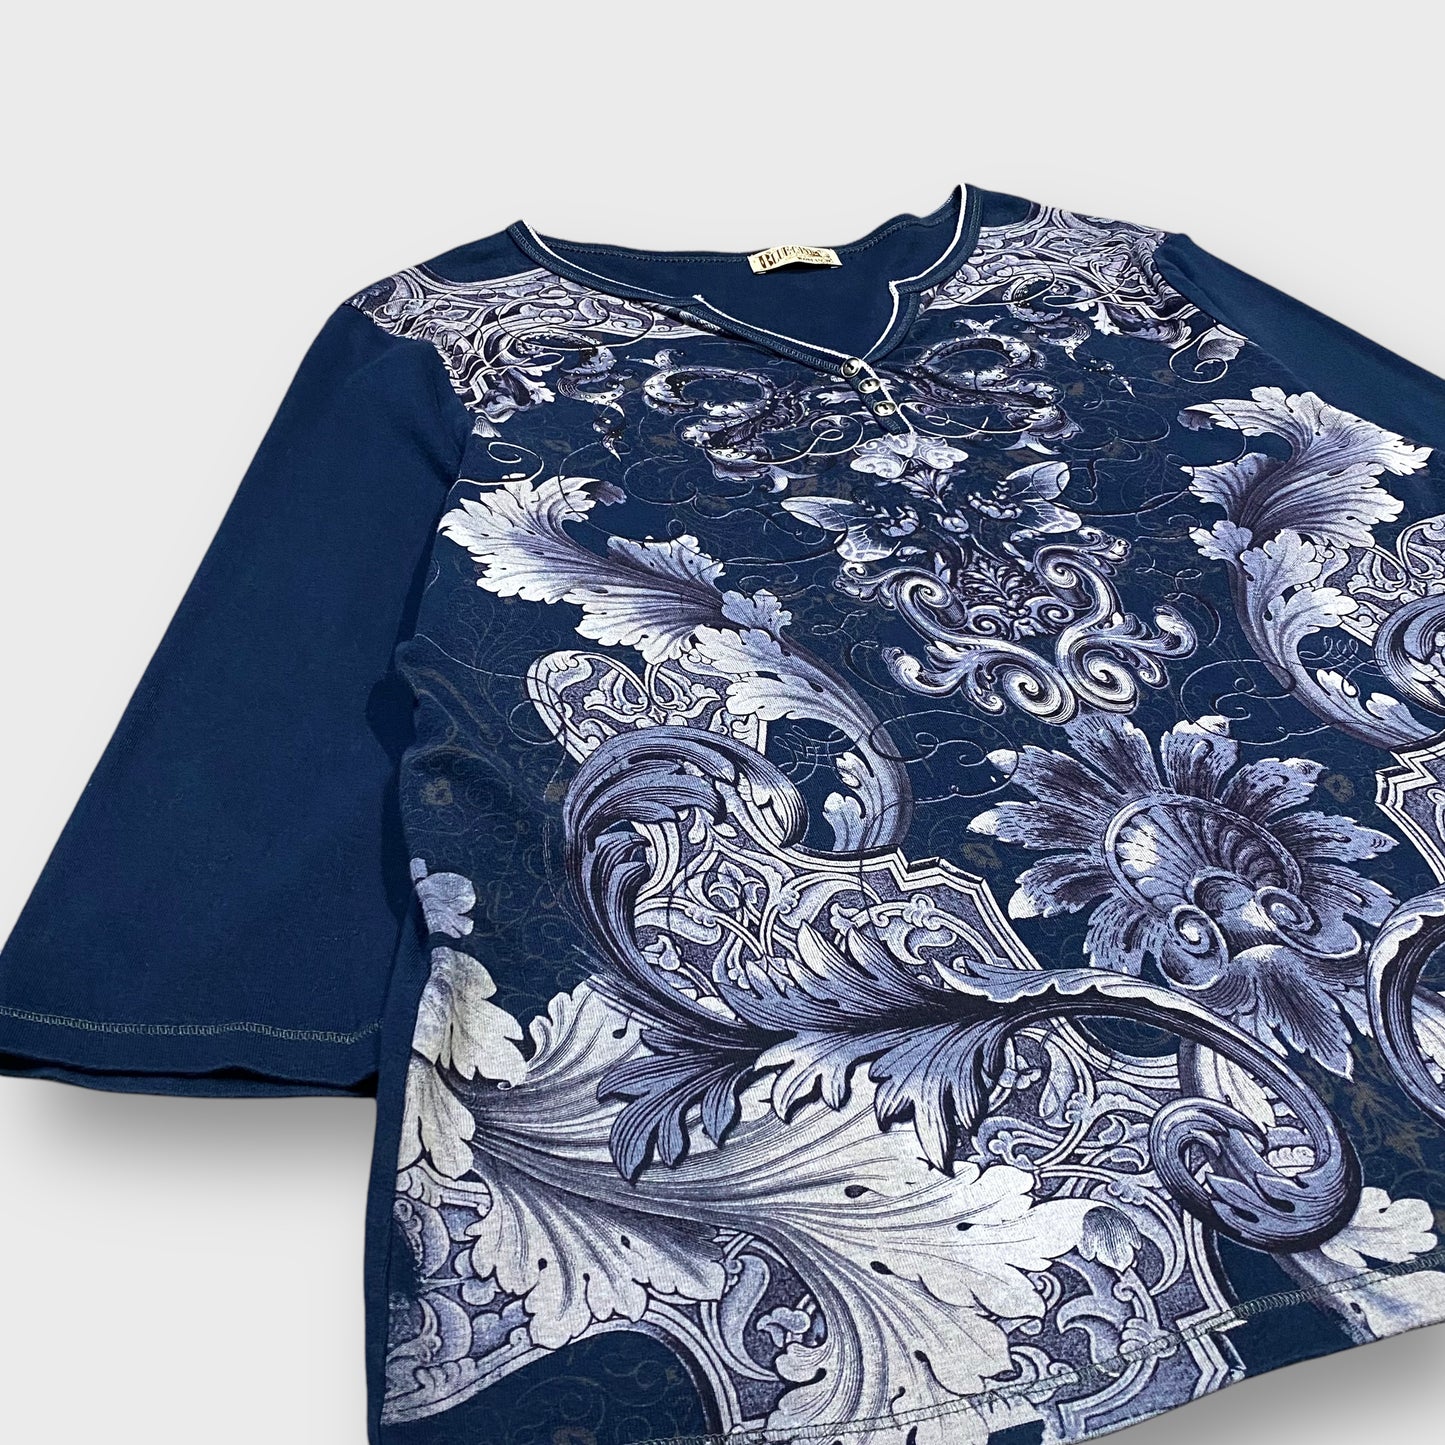 "BLUE CANYON" Botanical design t-shirt